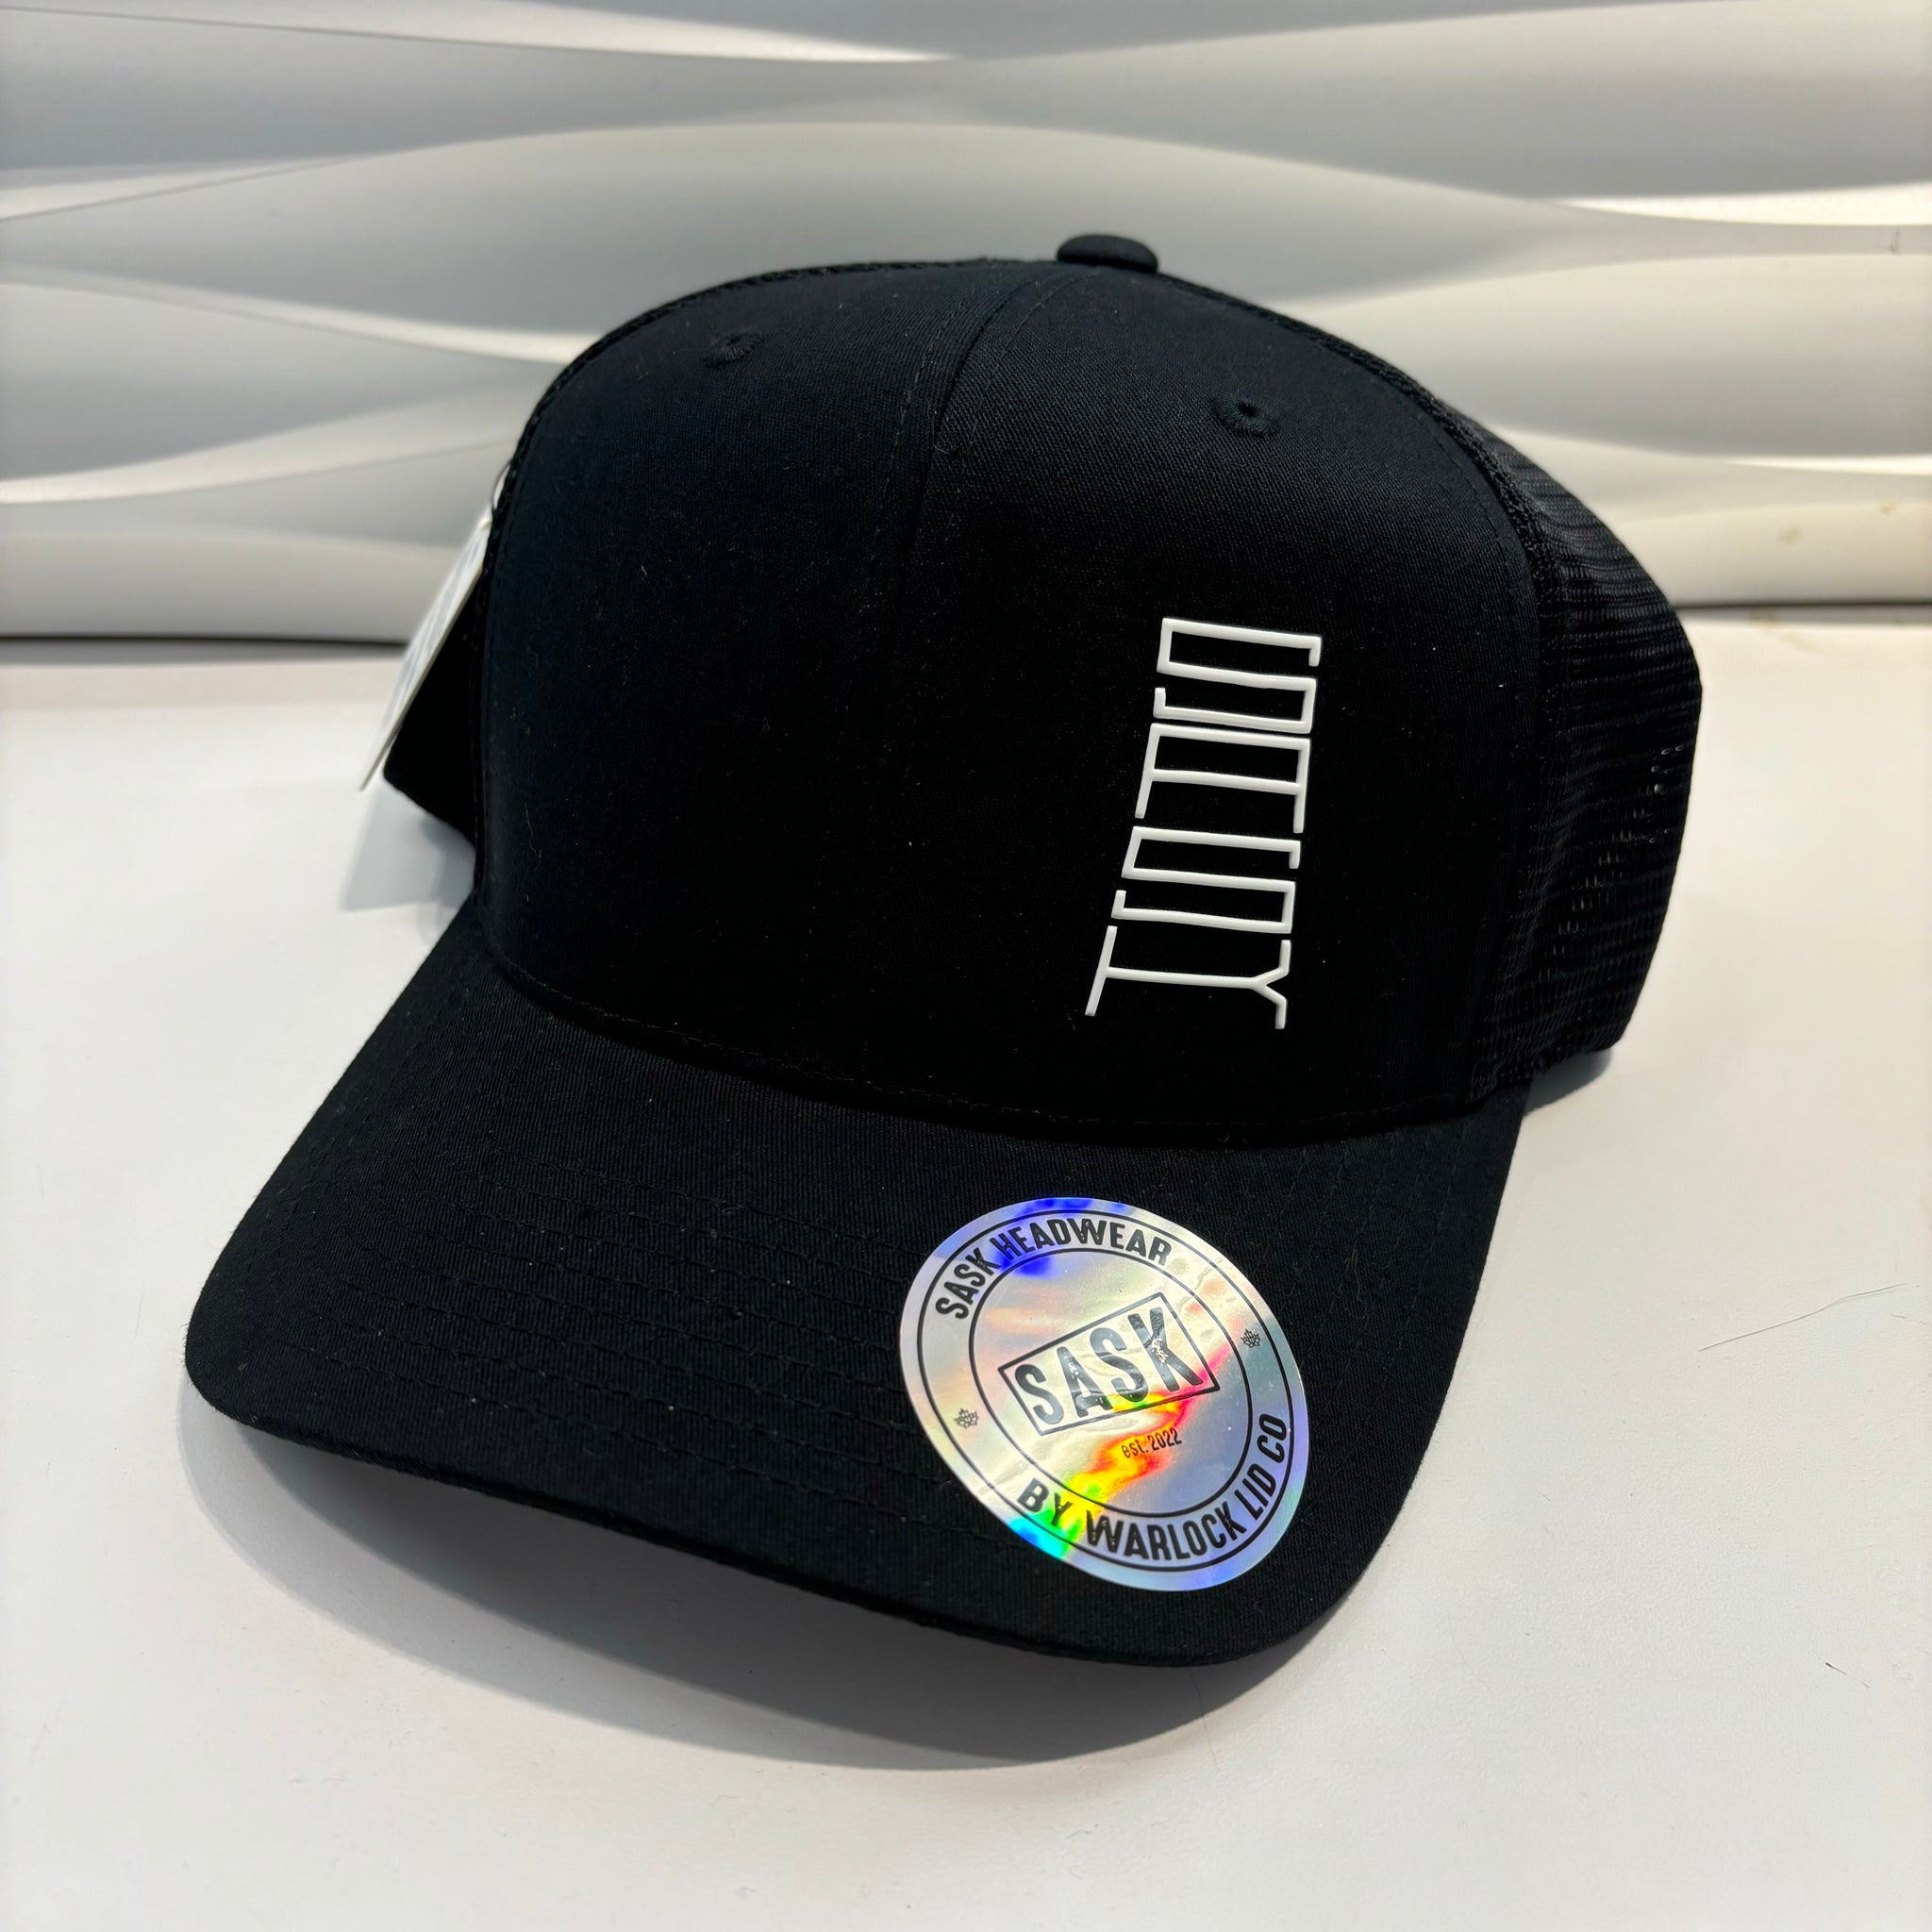 Sask Monogram Hat | Adjustable Snapback